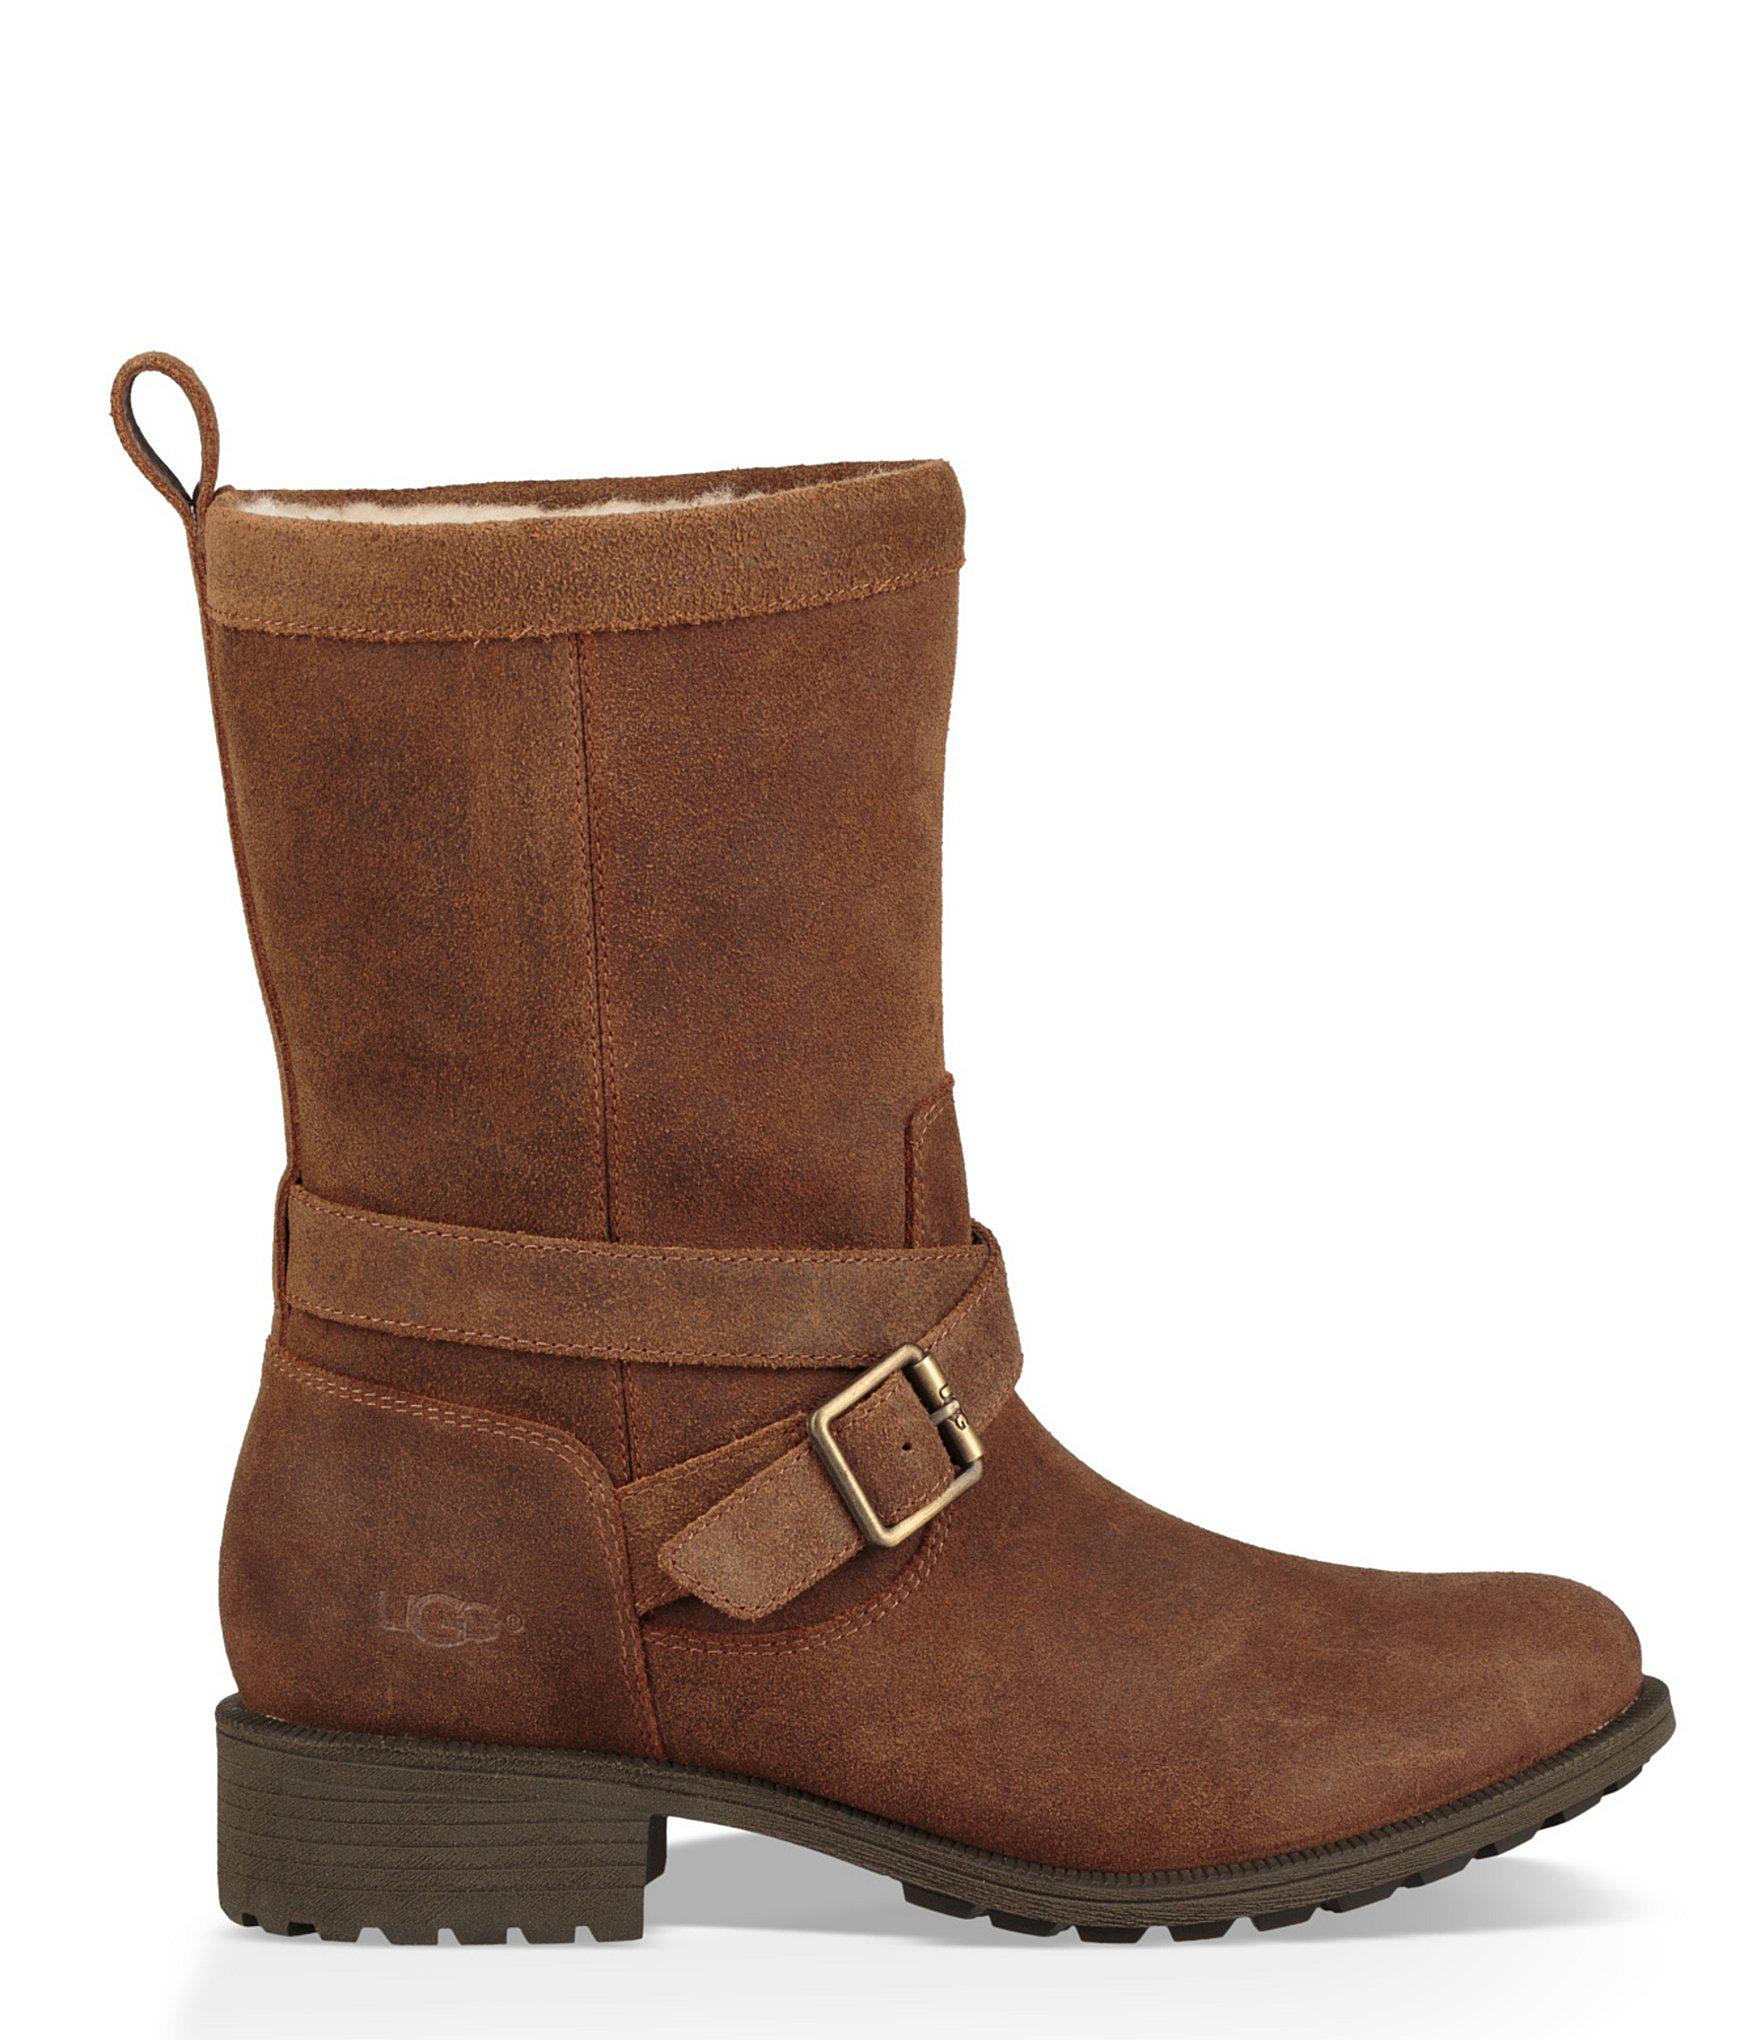 UGG Glendale Waterproof Leather Block Heel Boots in Brown - Lyst